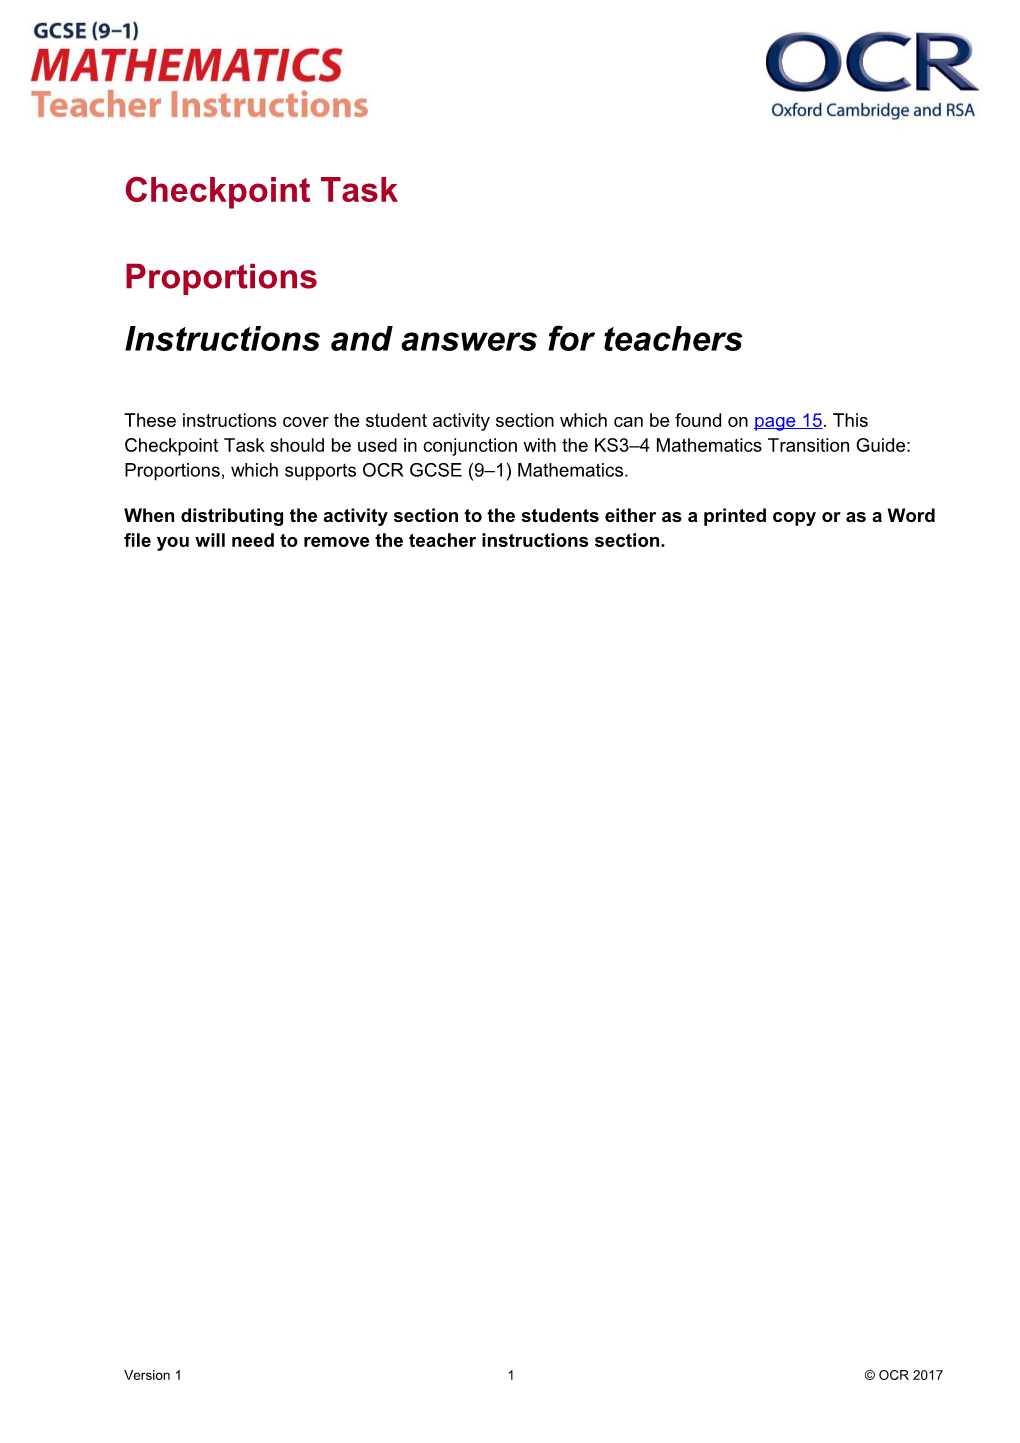 GCSE (9-1) Mathematics Checkpoint Task (Proportions)